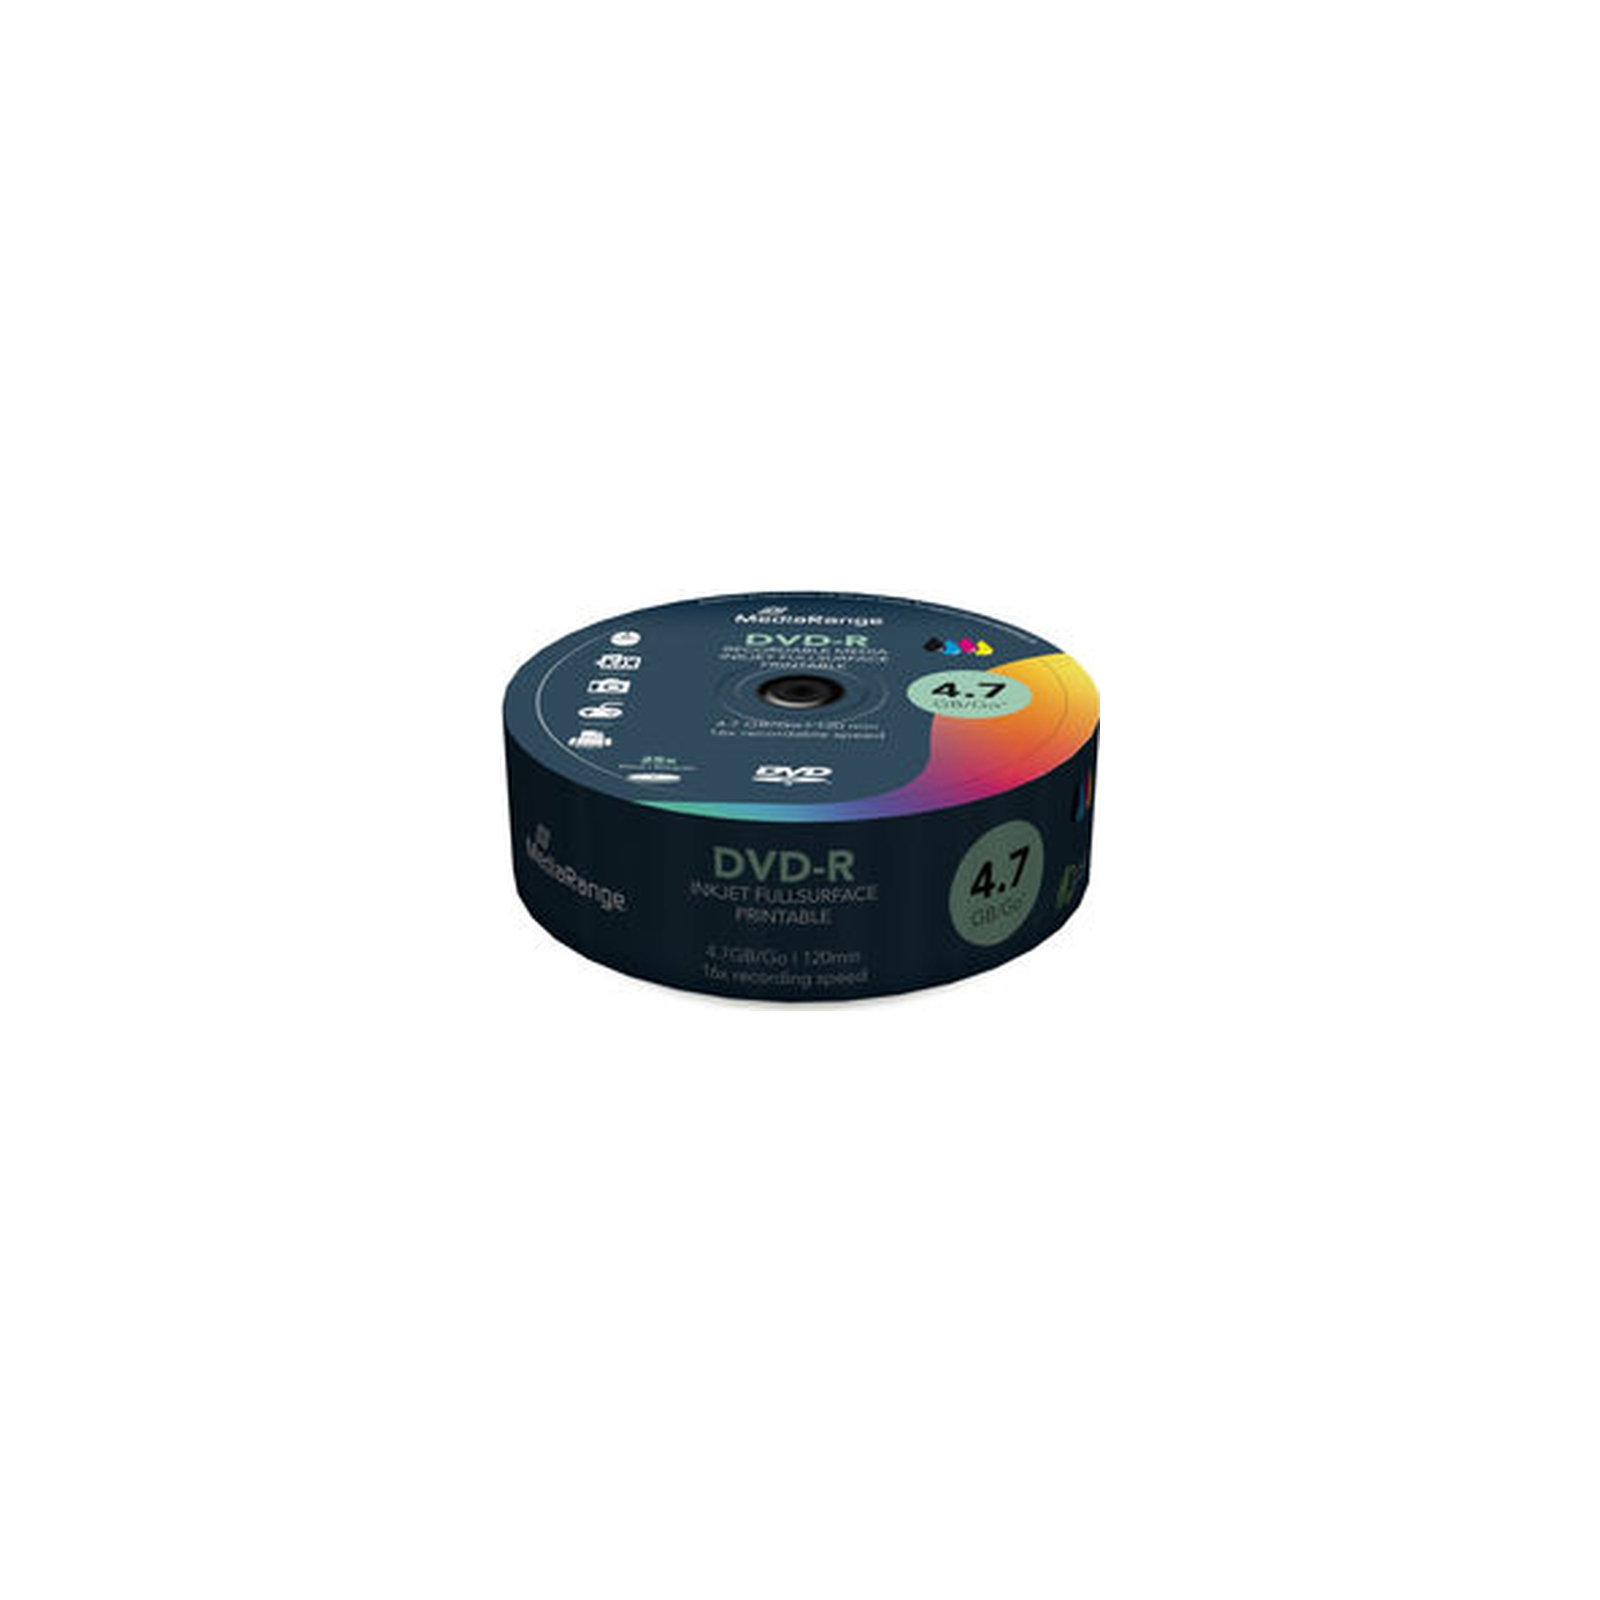 Диск DVD Mediarange DVD-R 4.7GB 120min 16x speed, inkjet fullsurface printable, Cake 25 (MR407) изображение 2